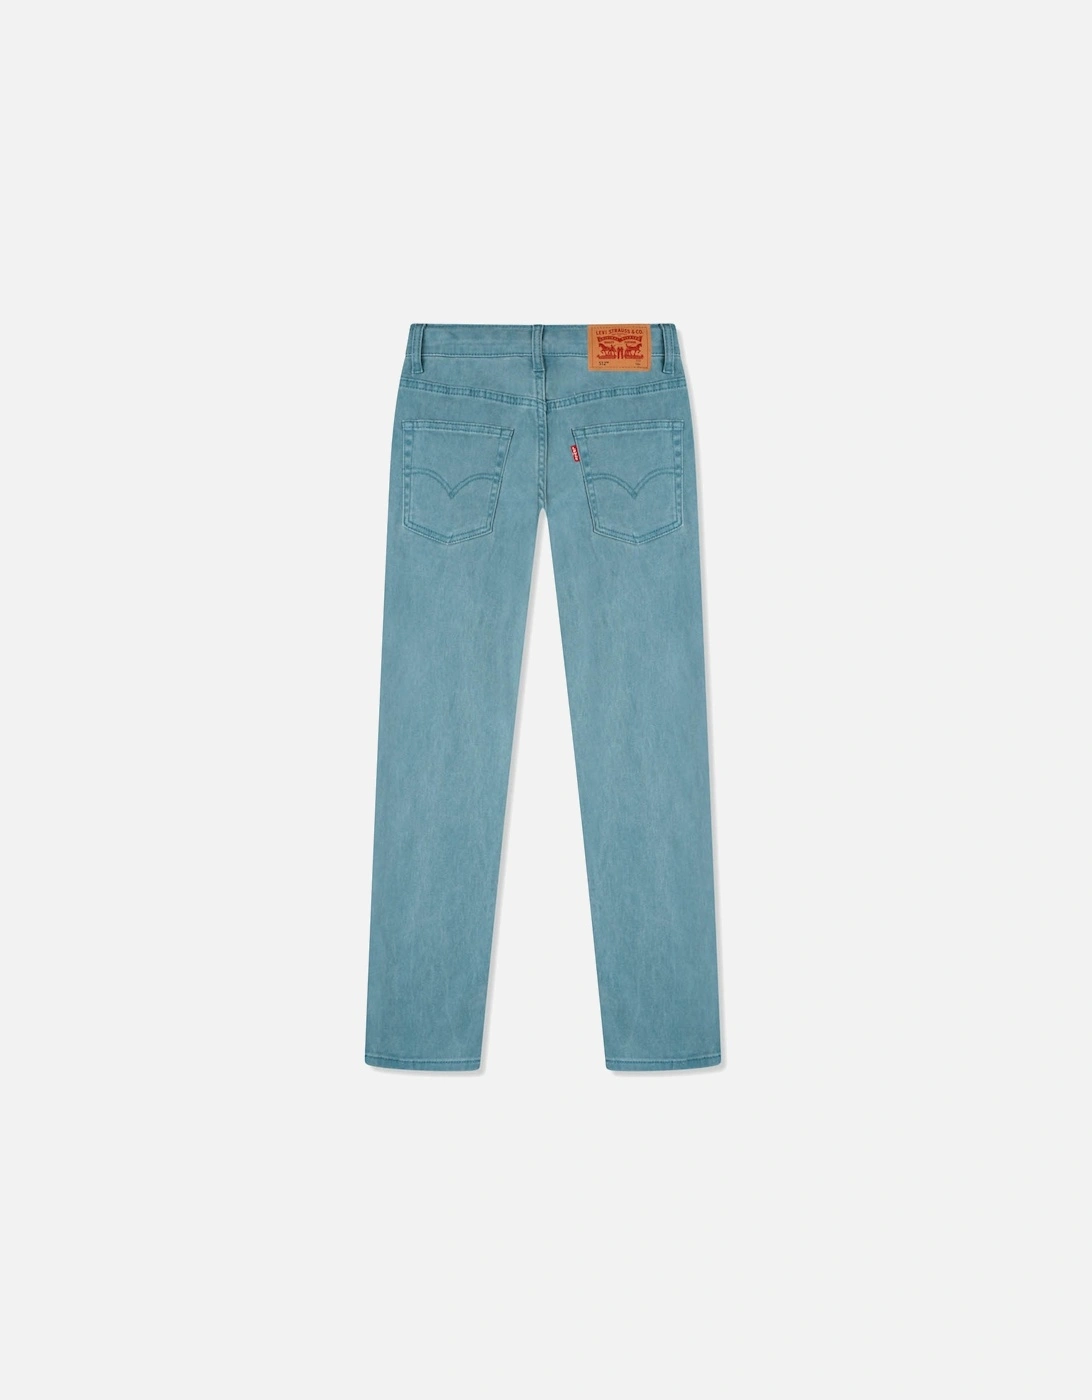 LEVIS Juniors 512 Slim Taper Jeans (Blue)